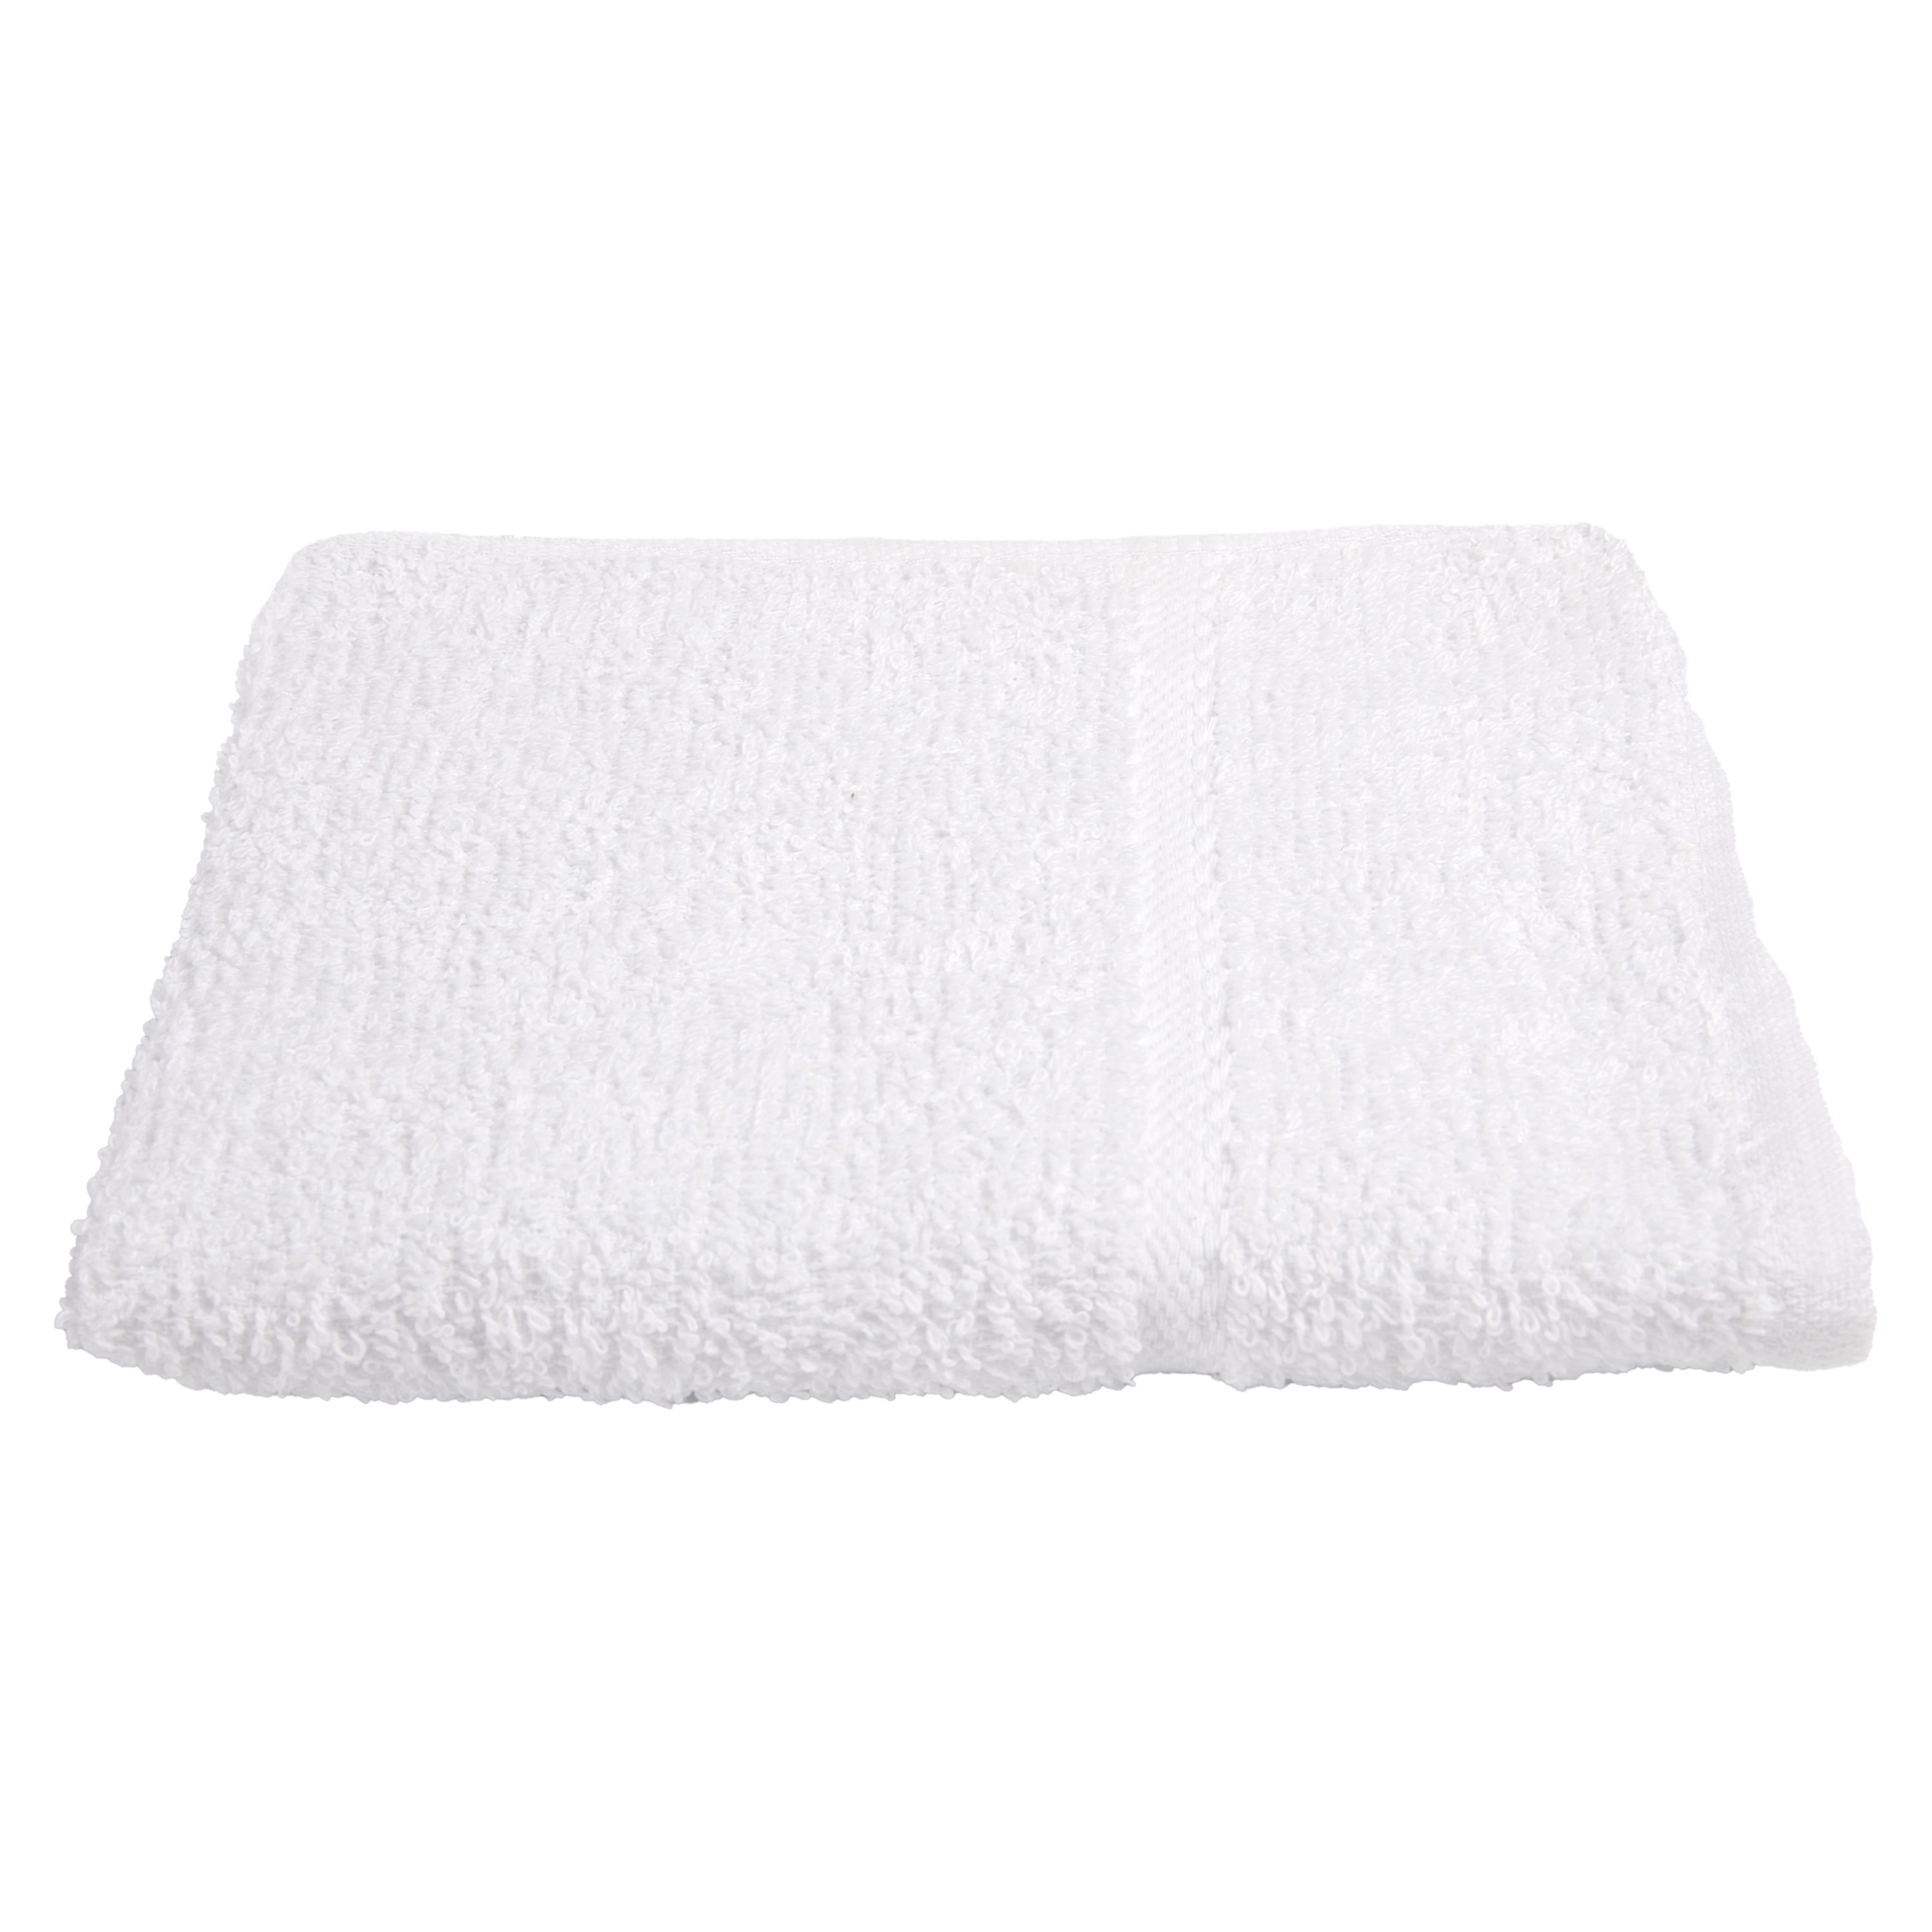 10 unids/lote 9.8 x 9.8 in toalla pequeña toalla de mano toalla de algodón  blanco toalla de algodón toalla de algodón para mujeres regalo para la